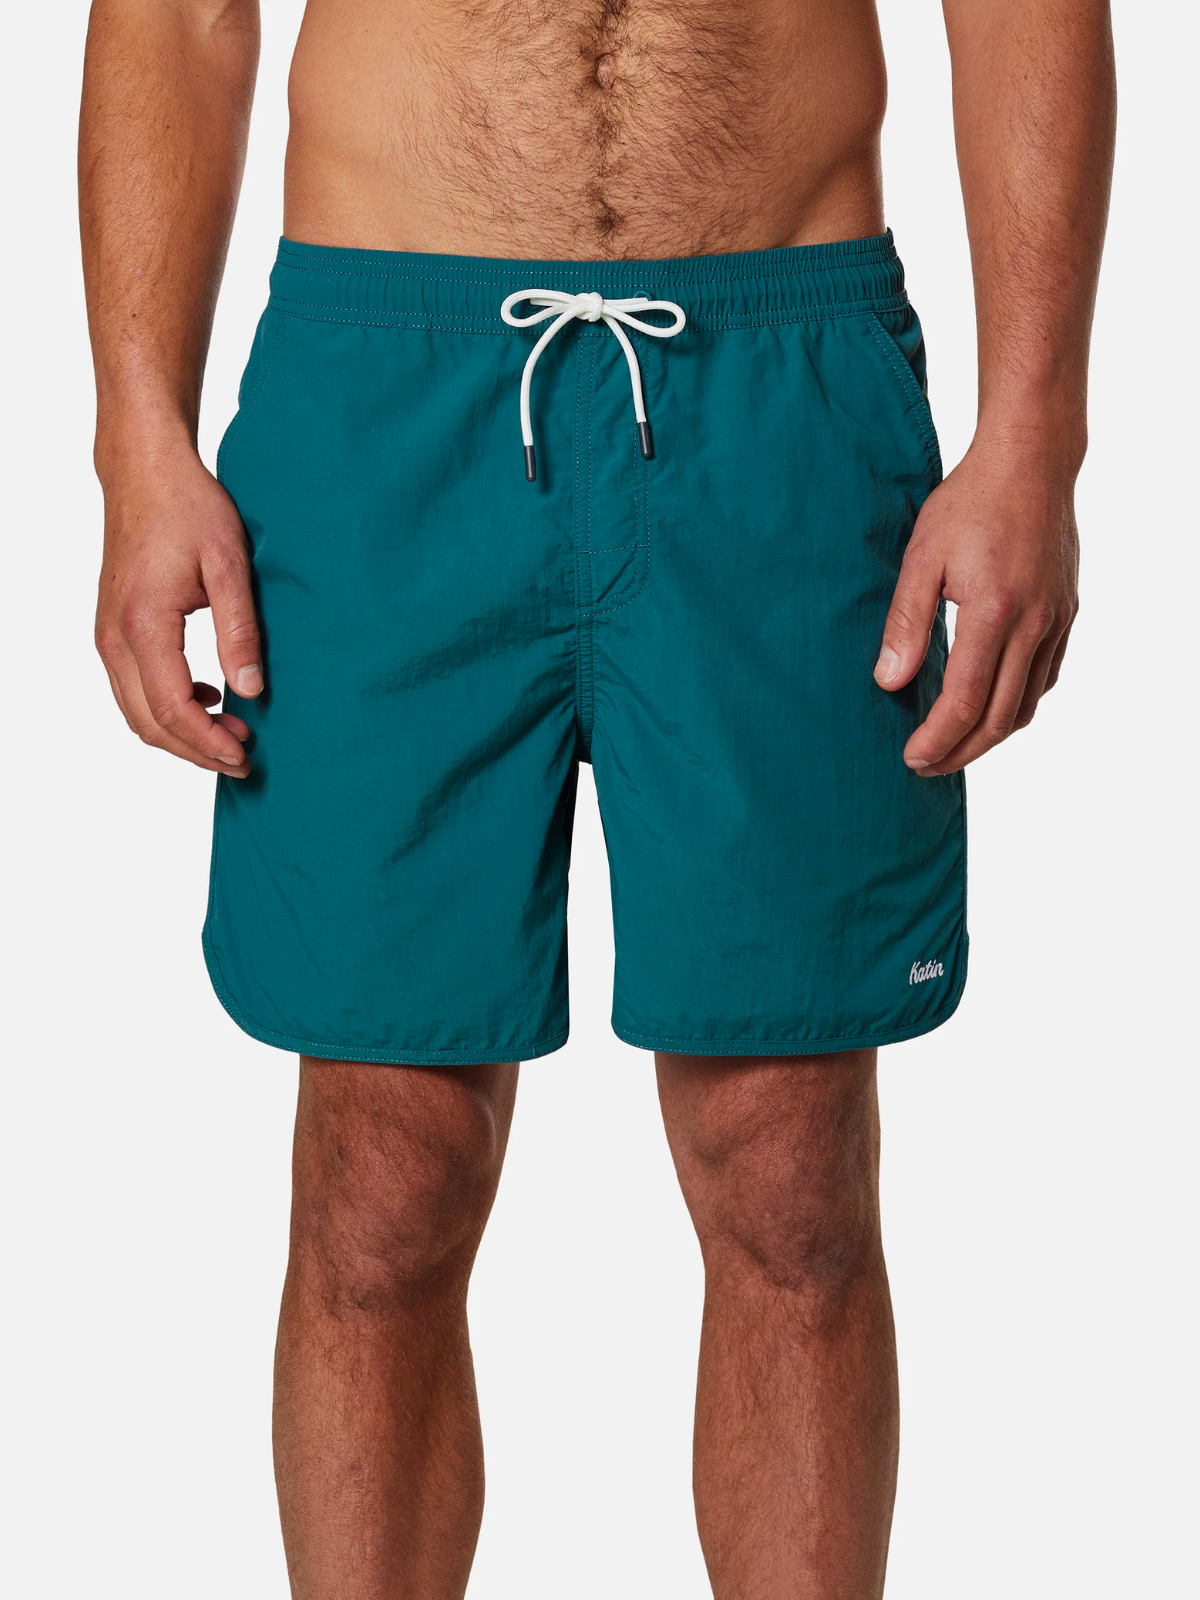 katin fraser volley blue green nylon swim trunk elastic waistband drawstring kempt athens ga georgia men's clothing store